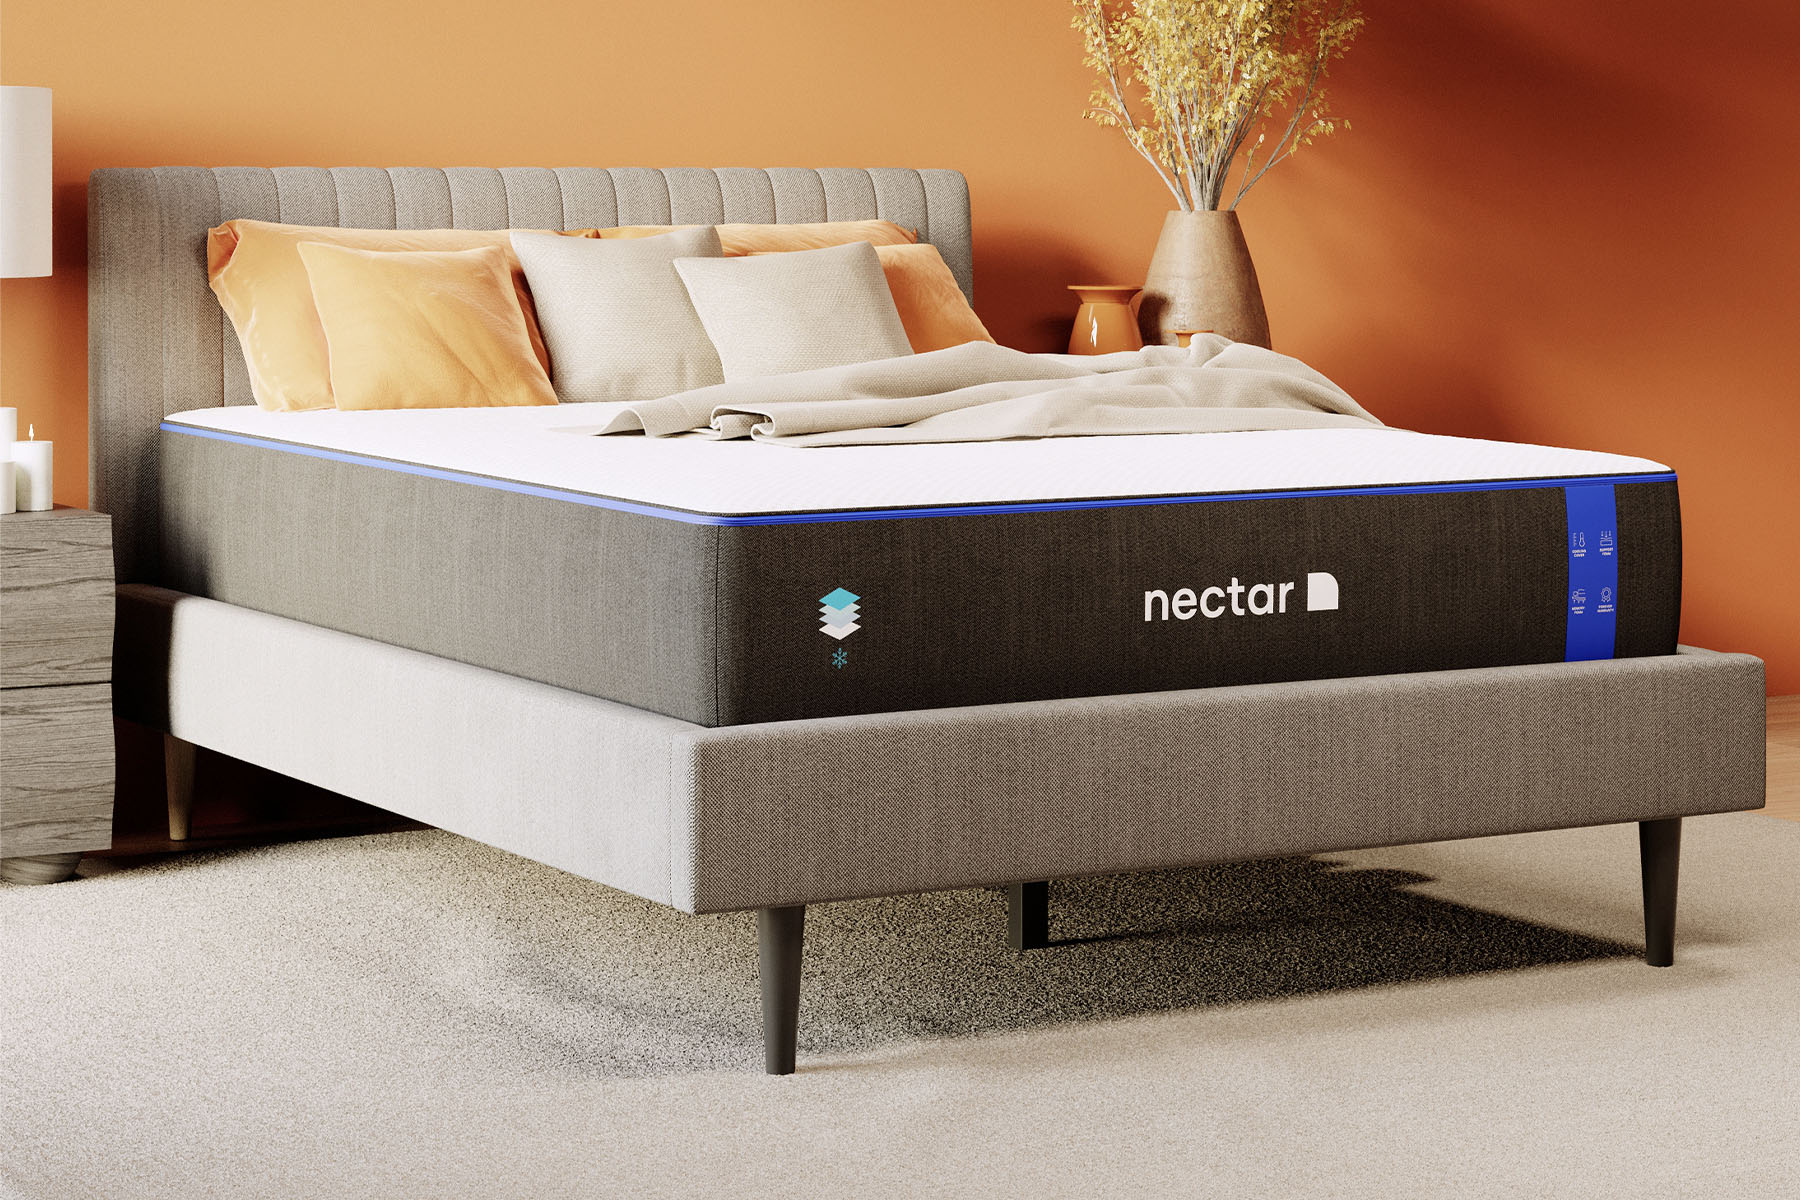 Nectar Hybrid Premier lifestyle mattress with Nectar mattress technology